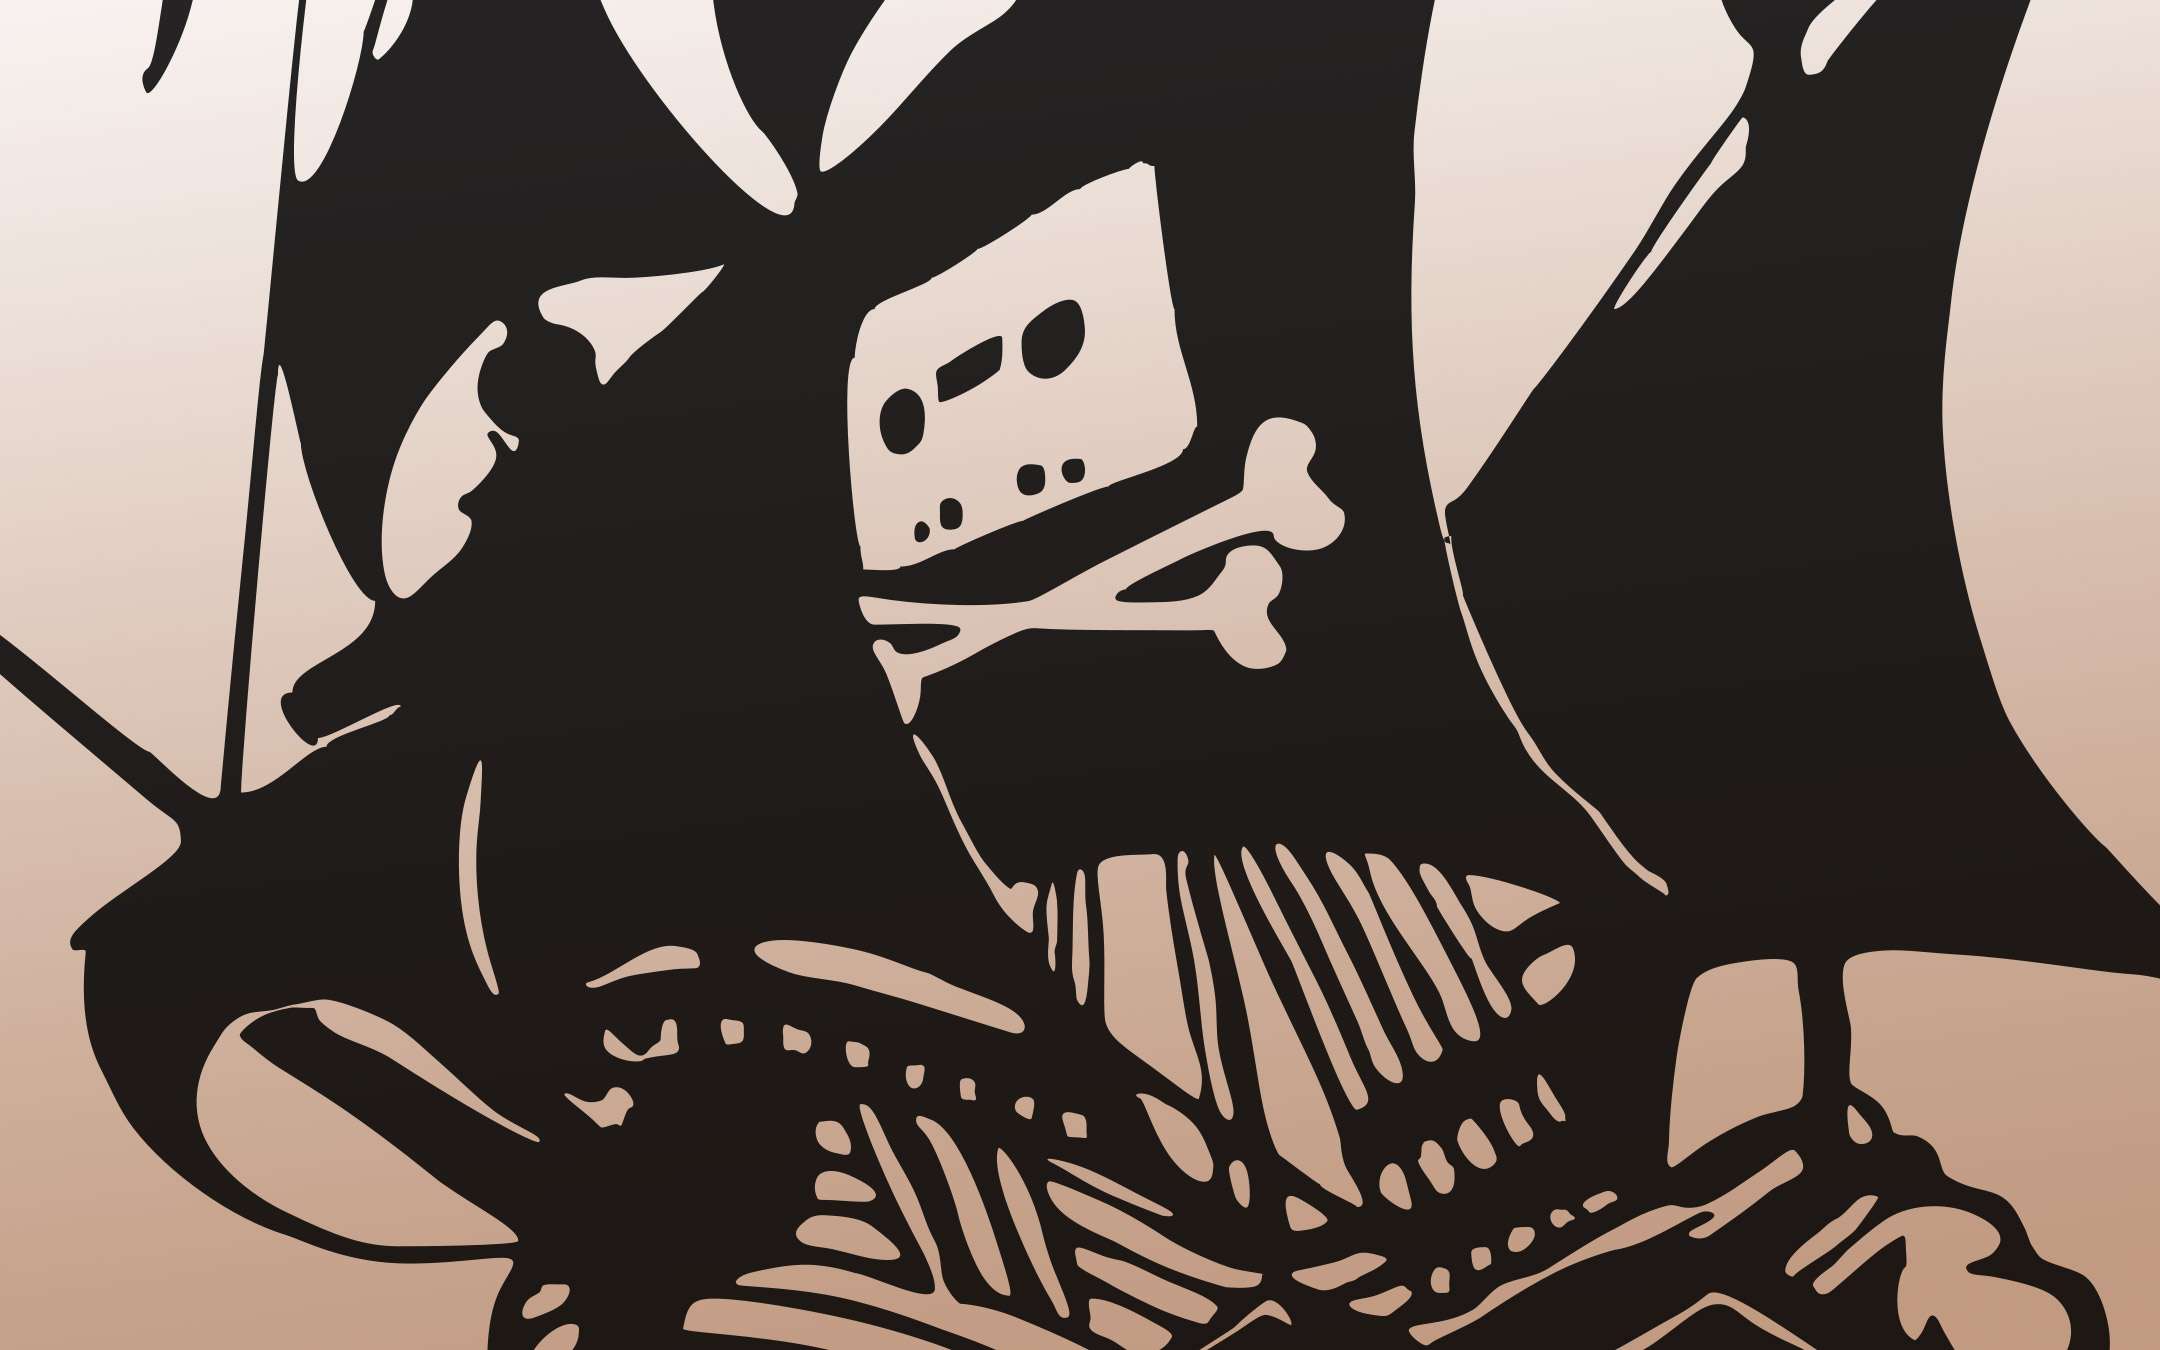 The Pirate Bay renova domínio principal até 2030 - TecMundo